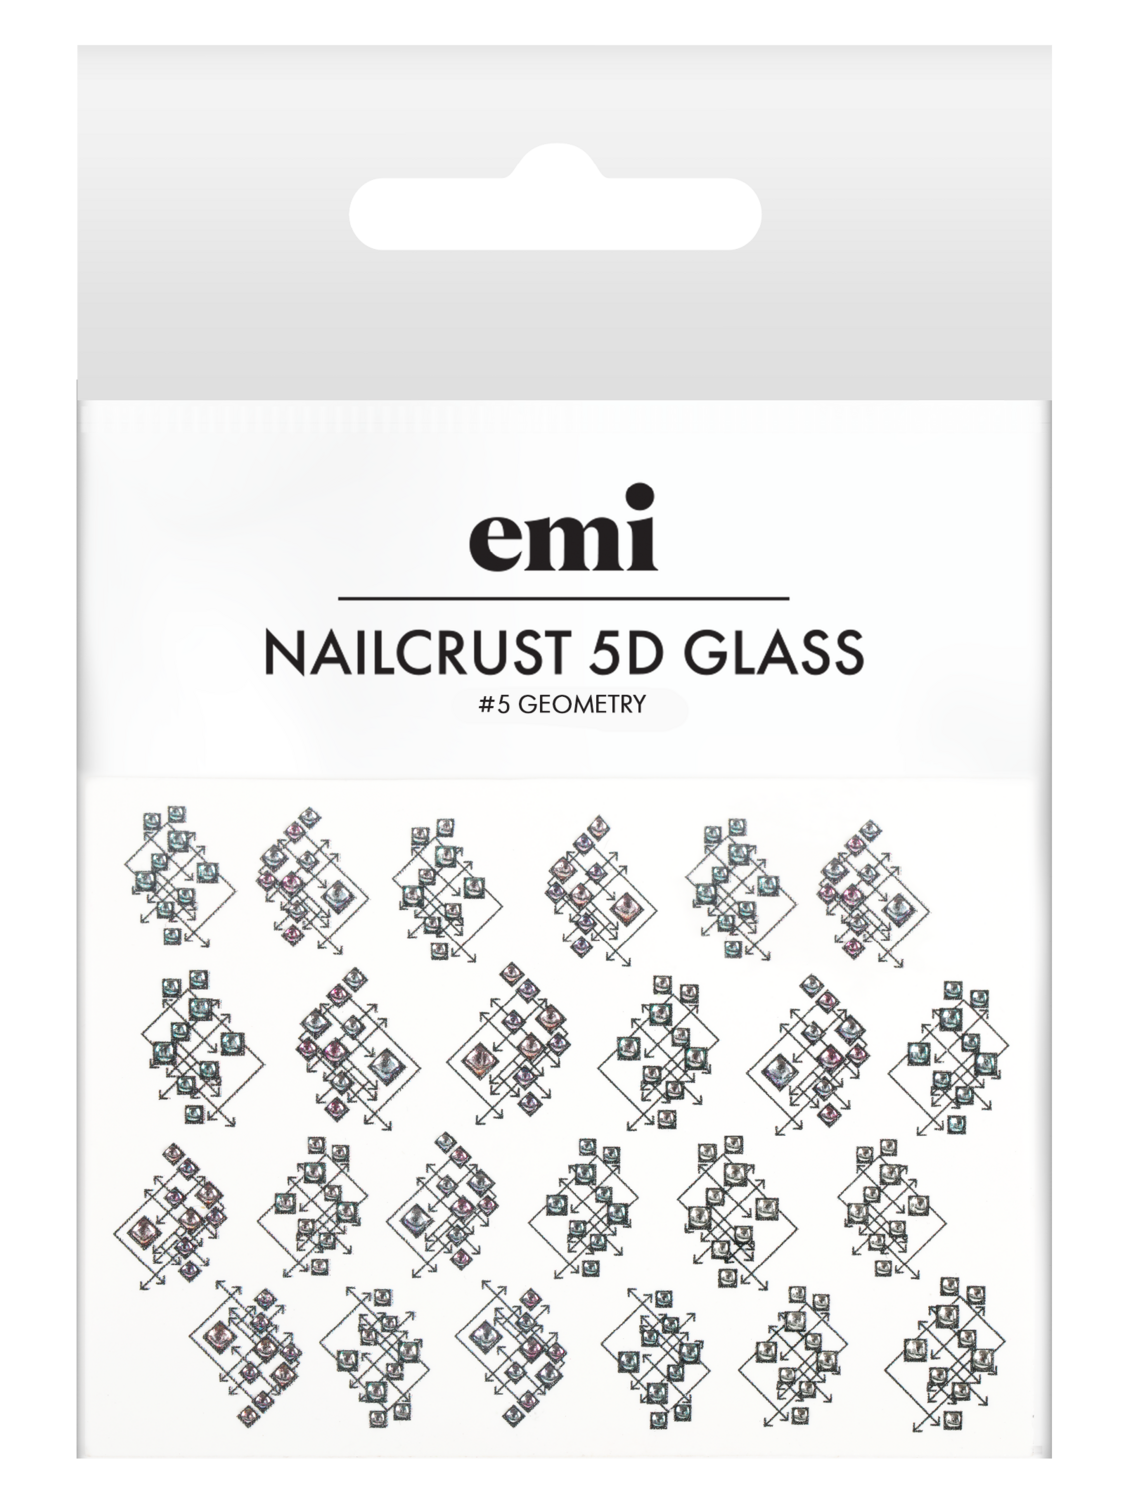 NAILCRUST 5D GLASS No. 5 Geometry